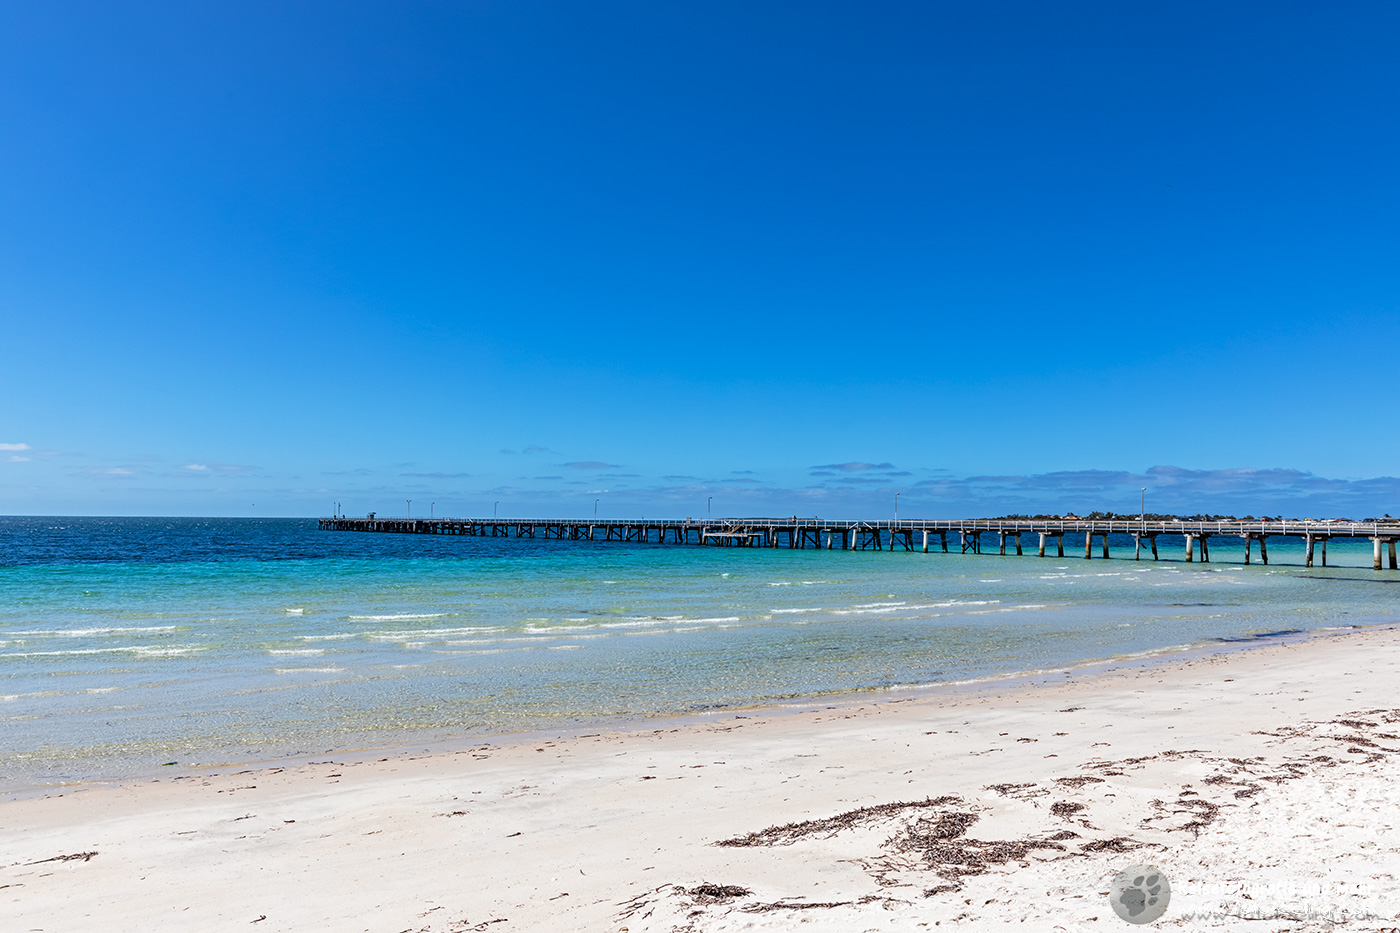 Tumby Bay Jetty, South Australia, Australien